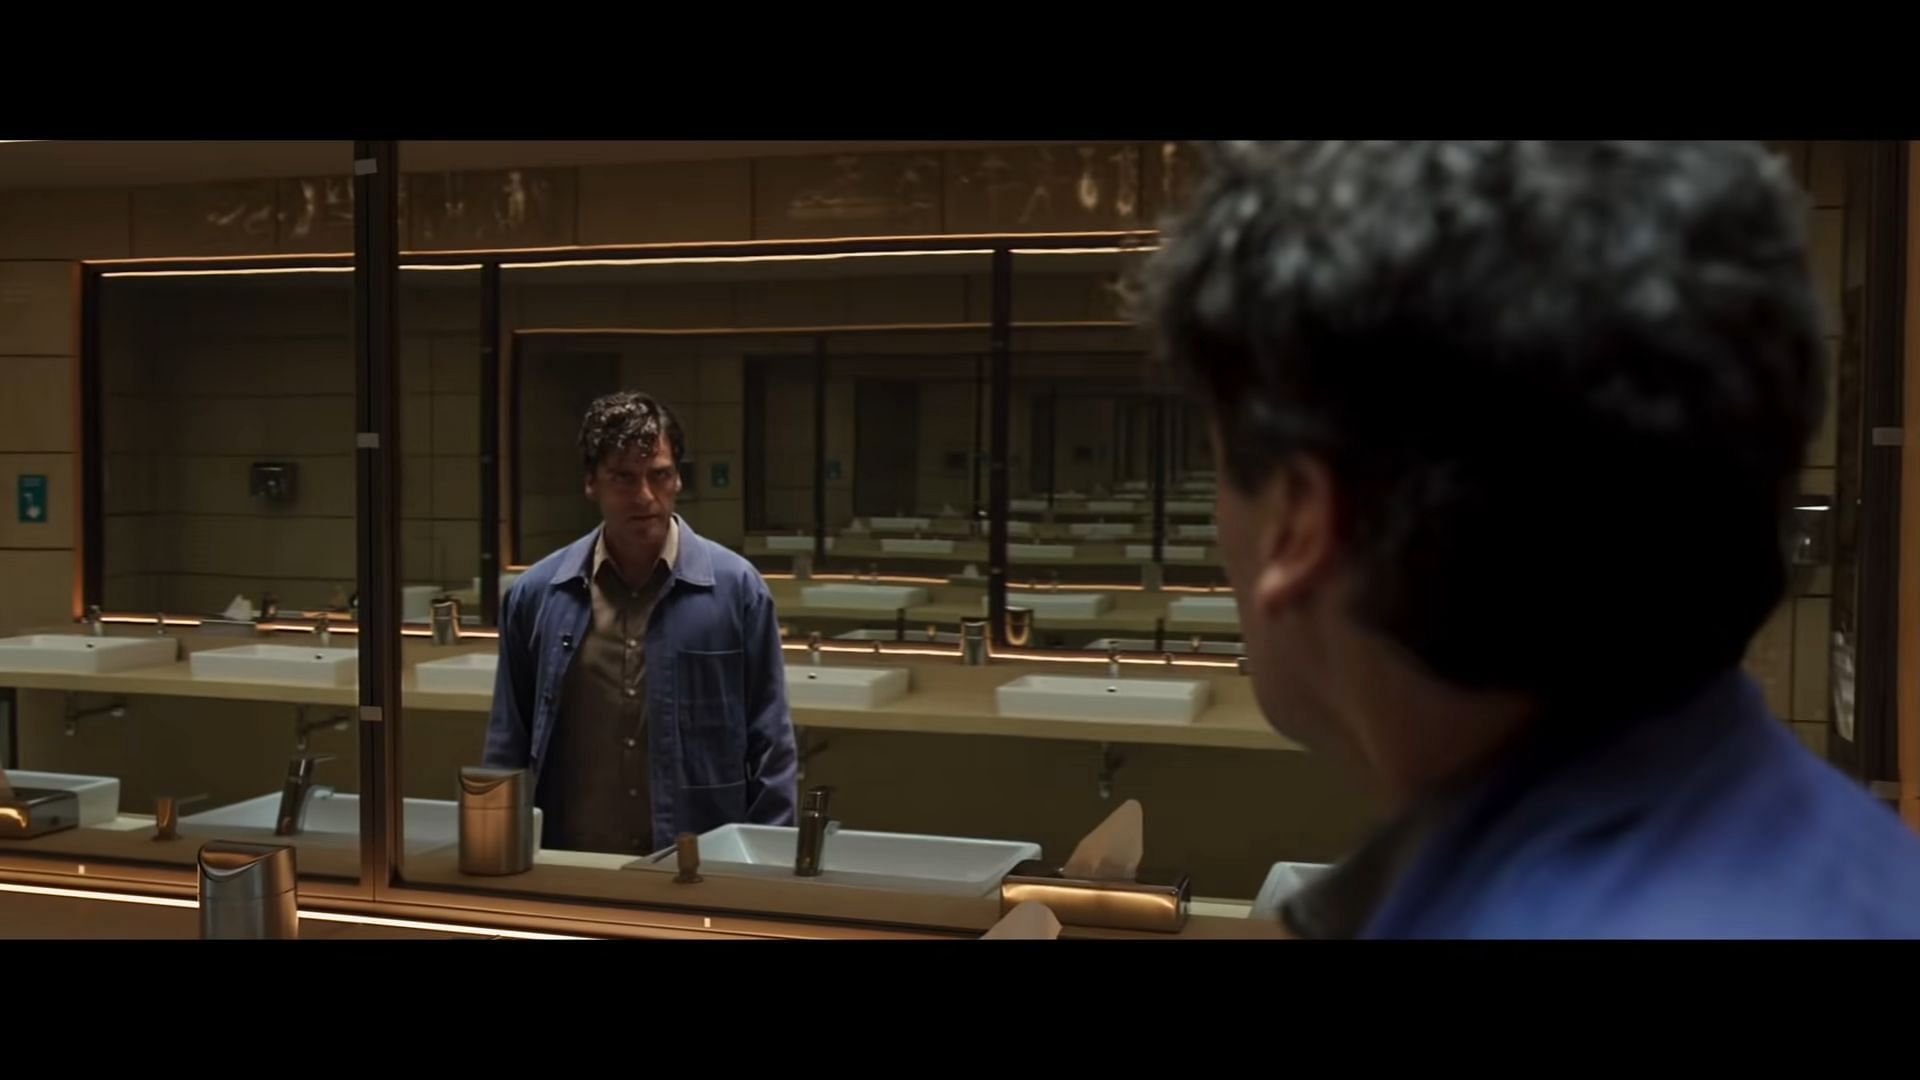 Marc Spector confronting Steven Grant through mirrors in the trailer (Image via Marvel Studios)